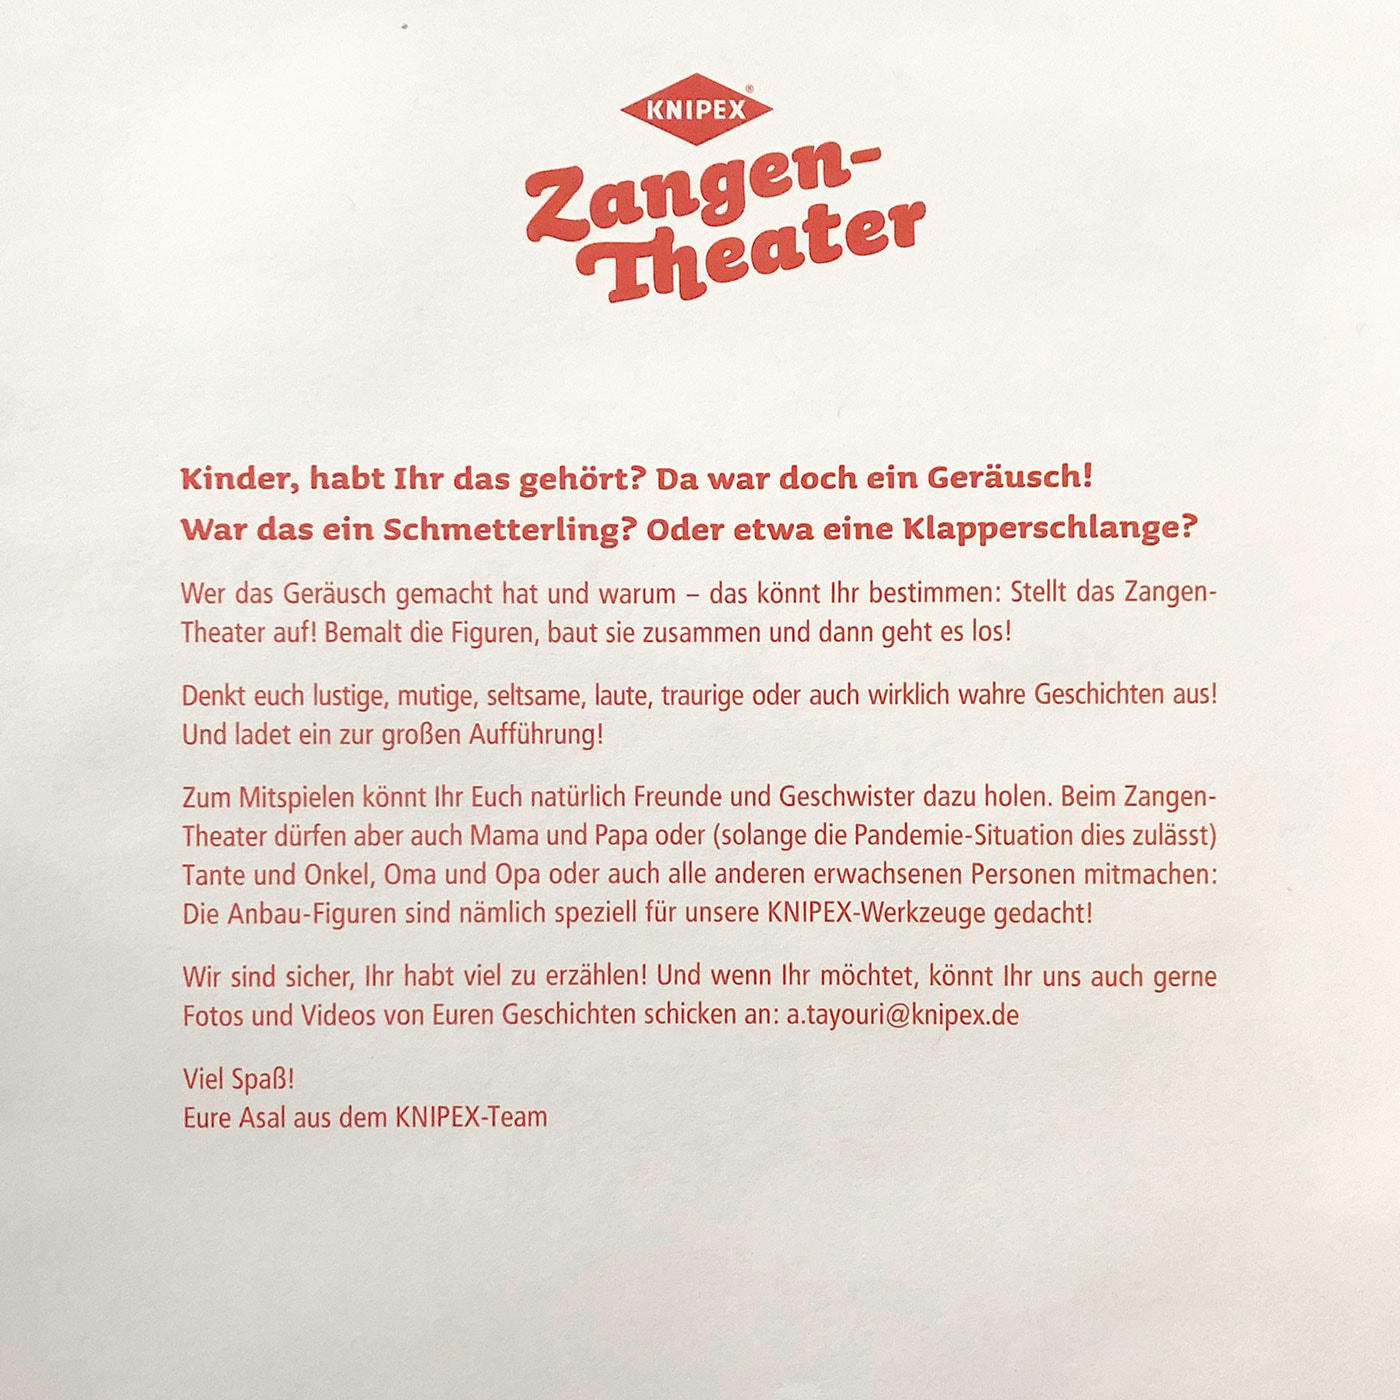 Zangentheater Mit Kindern Bsateln // Himbeer